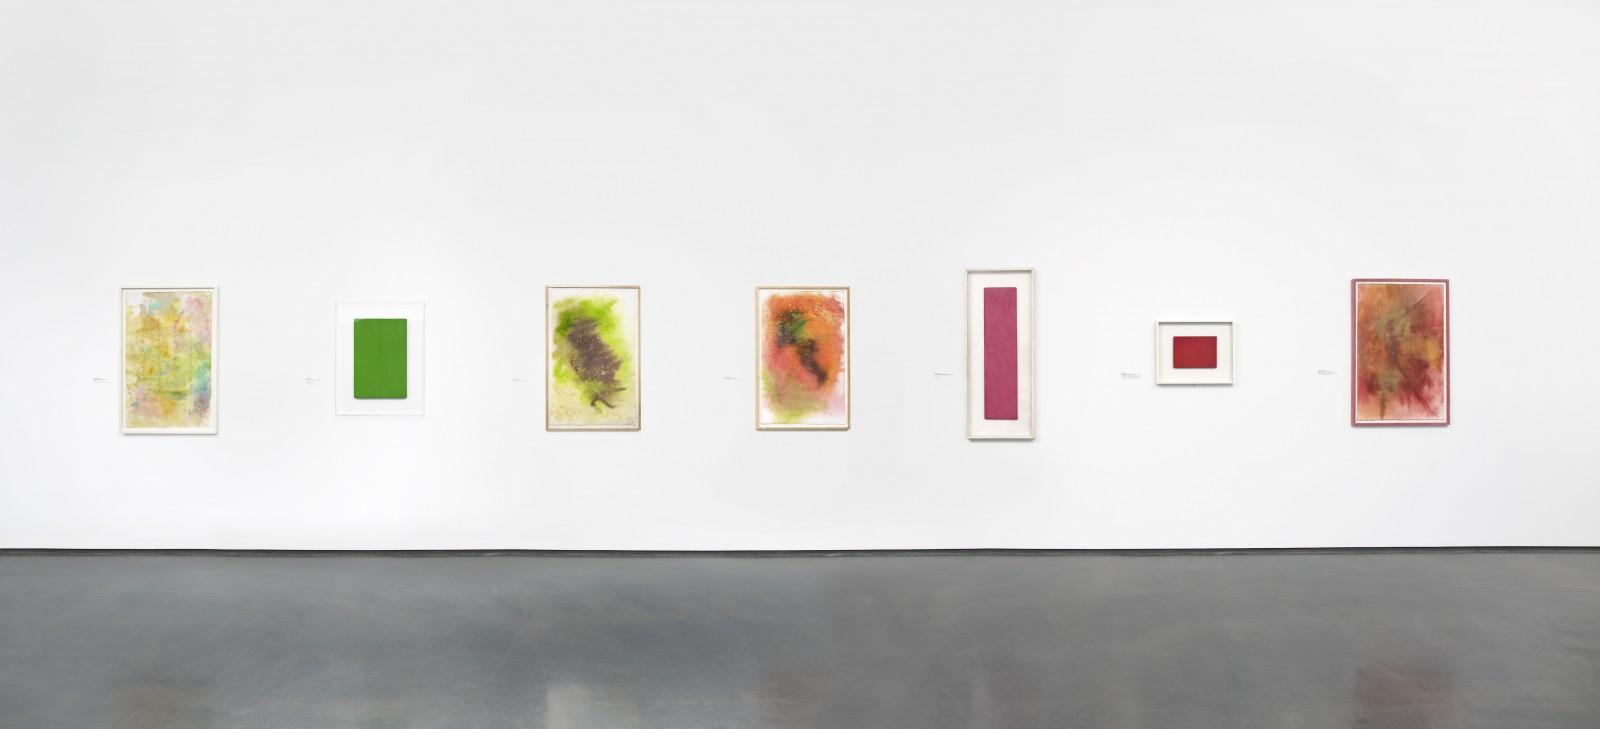 Vue de l'exposition "Yves Klein / David Hammons", Aspen Art Museum, 2014